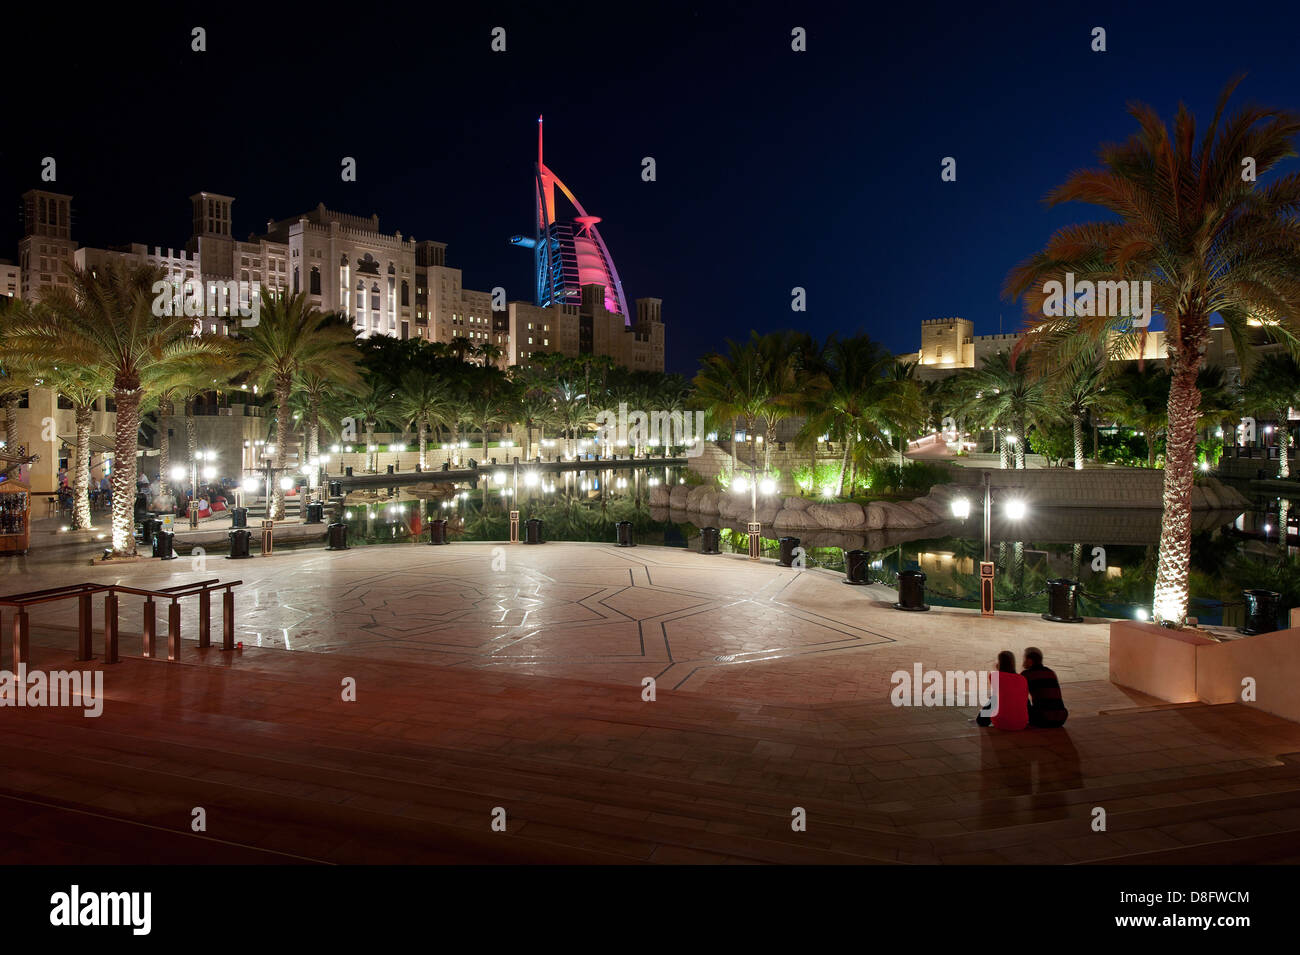 Amphitheater at Madinat Jumeirah at night with view of Burj Al Arab, New Dubai, UAE Stock Photo